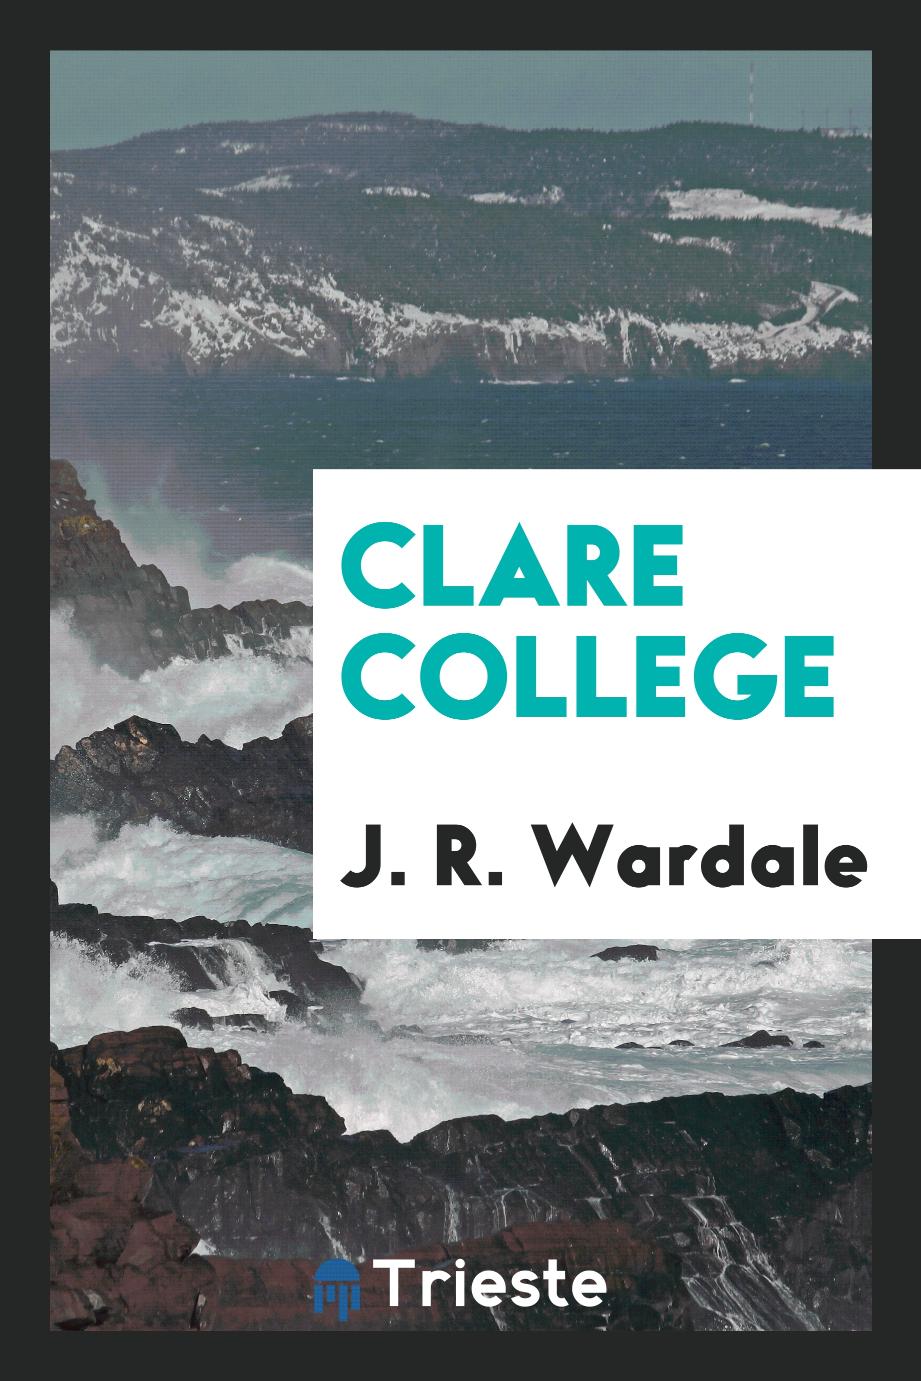 Clare college